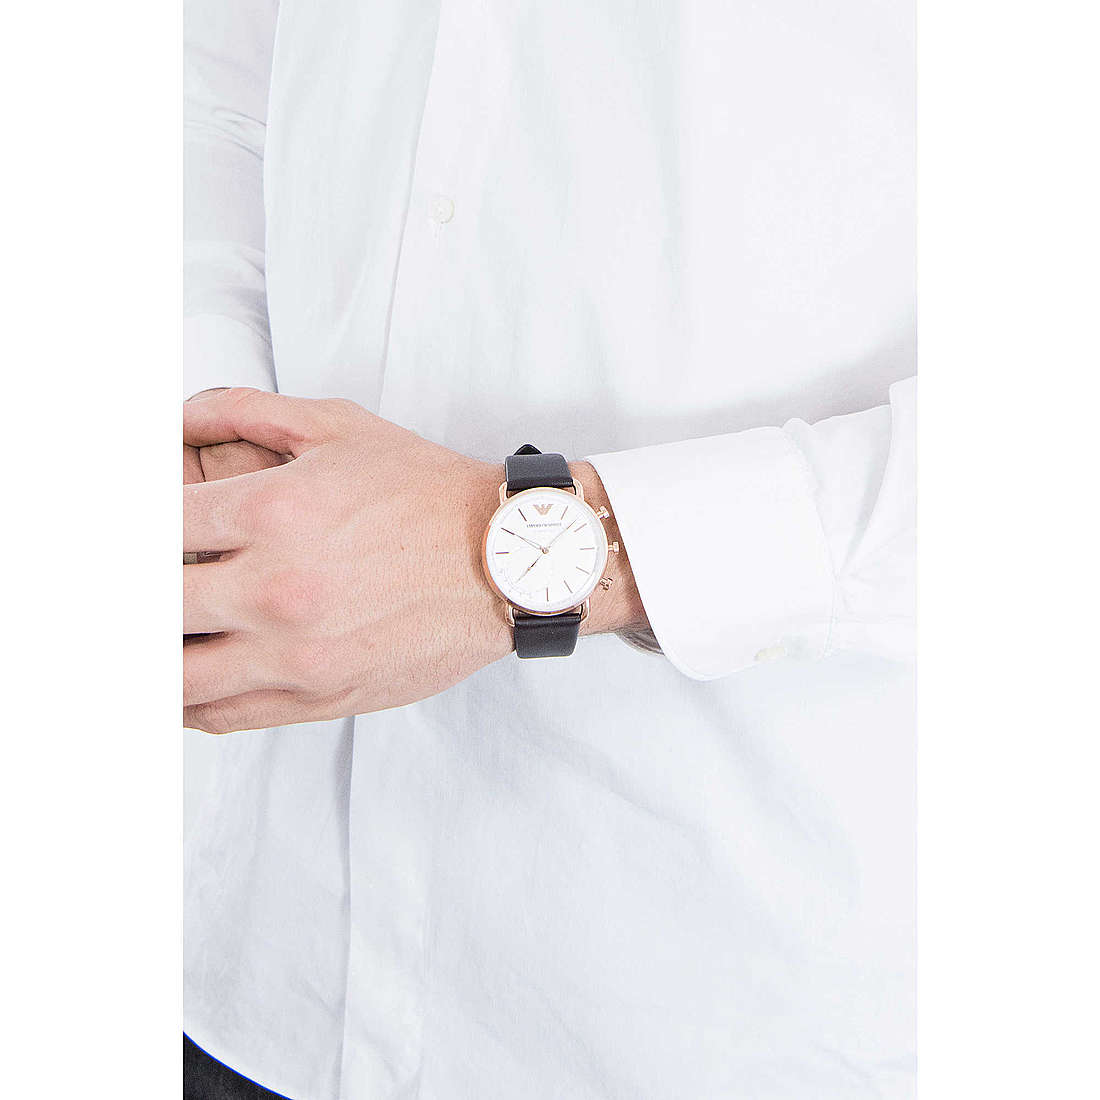 Emporio Armani Smartwatches uomo ART3029 indosso